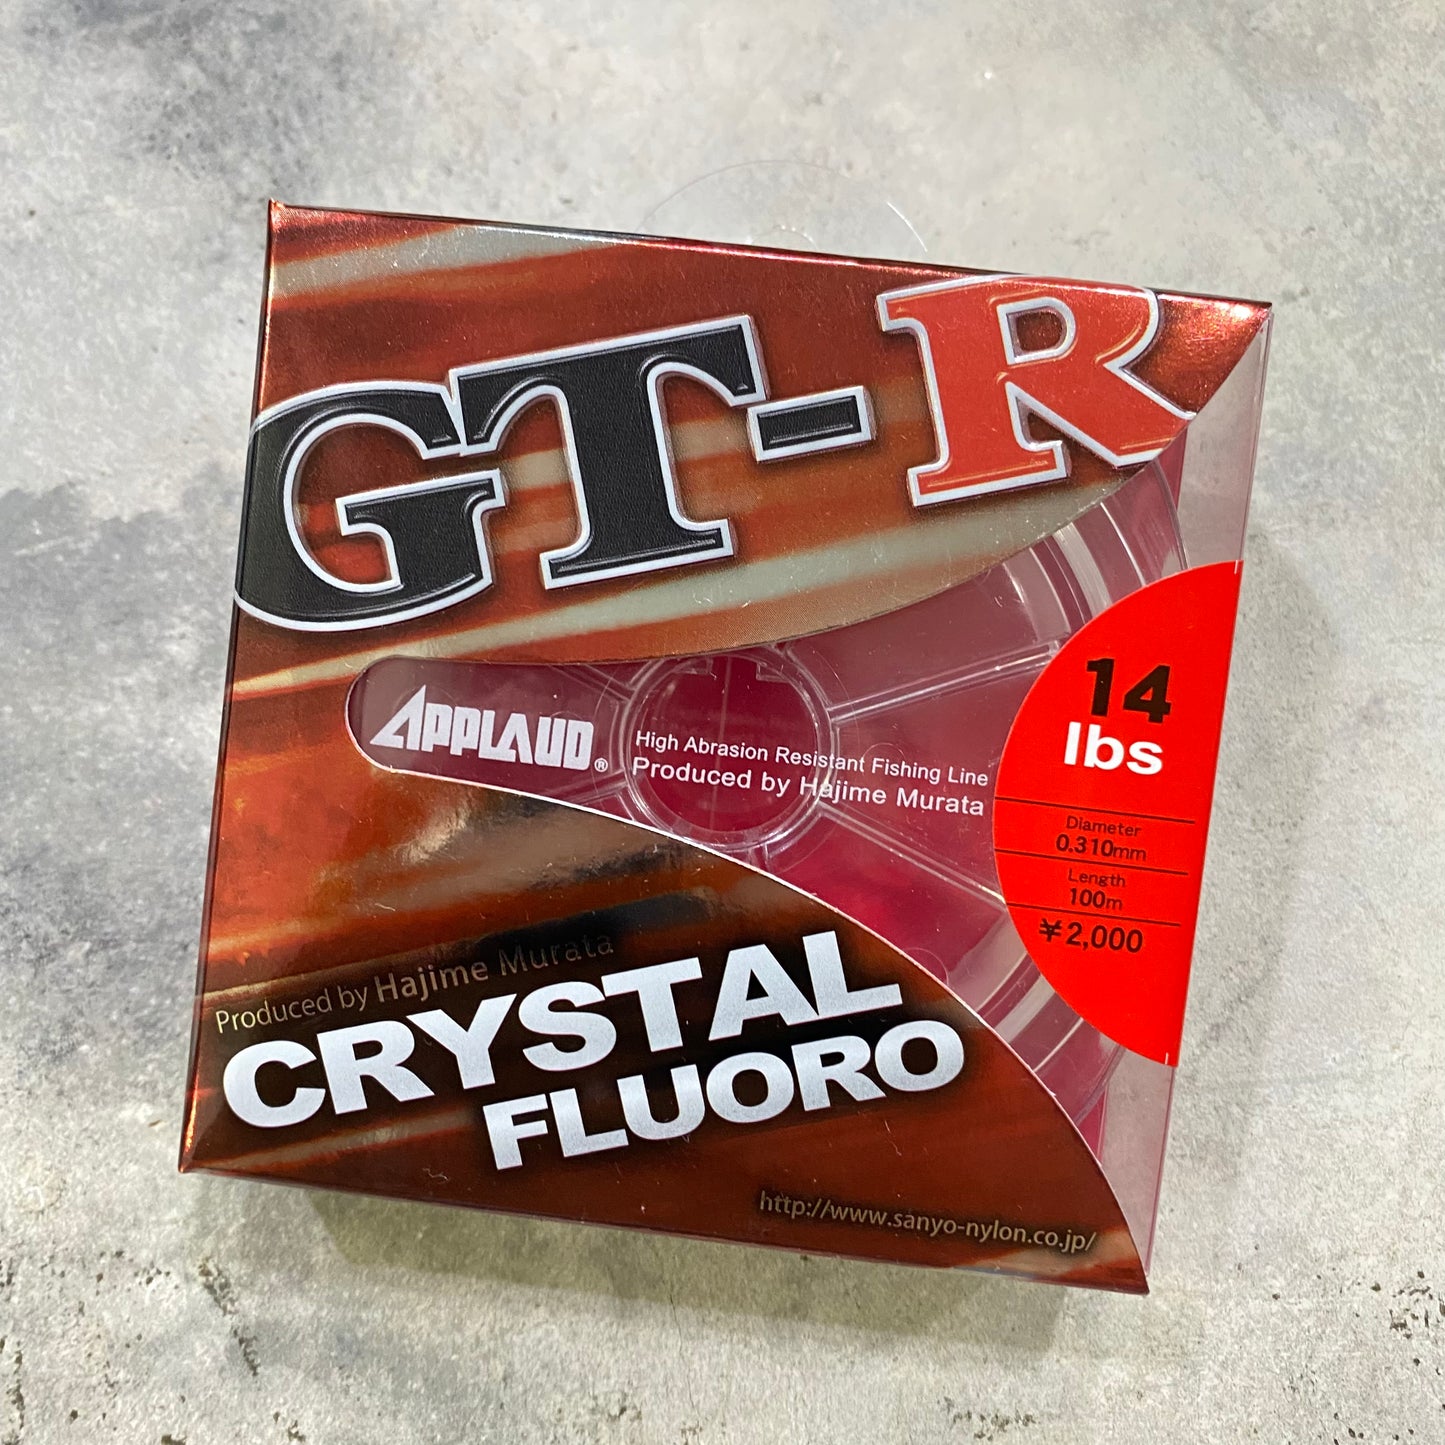 Applaud GT-R Crystal Fluoro